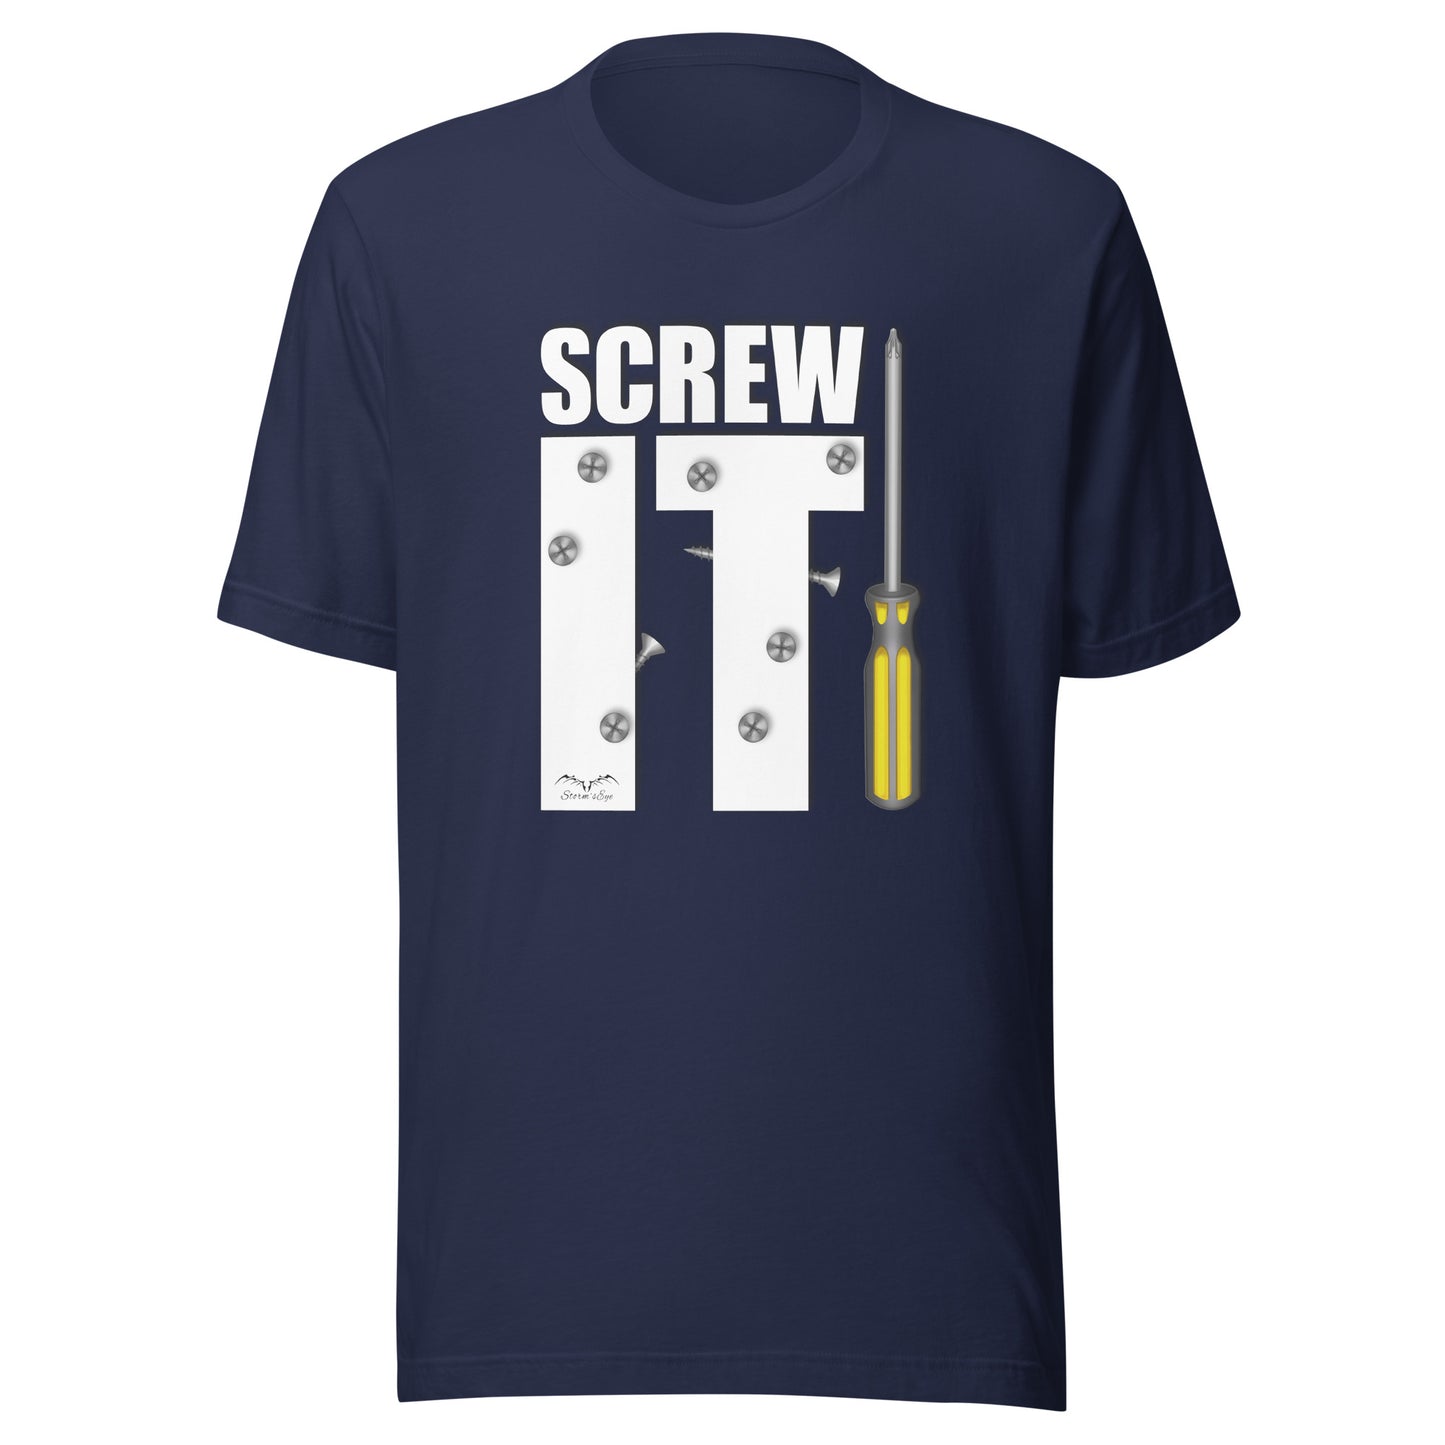 screw it DIY t-shirt navy blue, by Stormseye Design